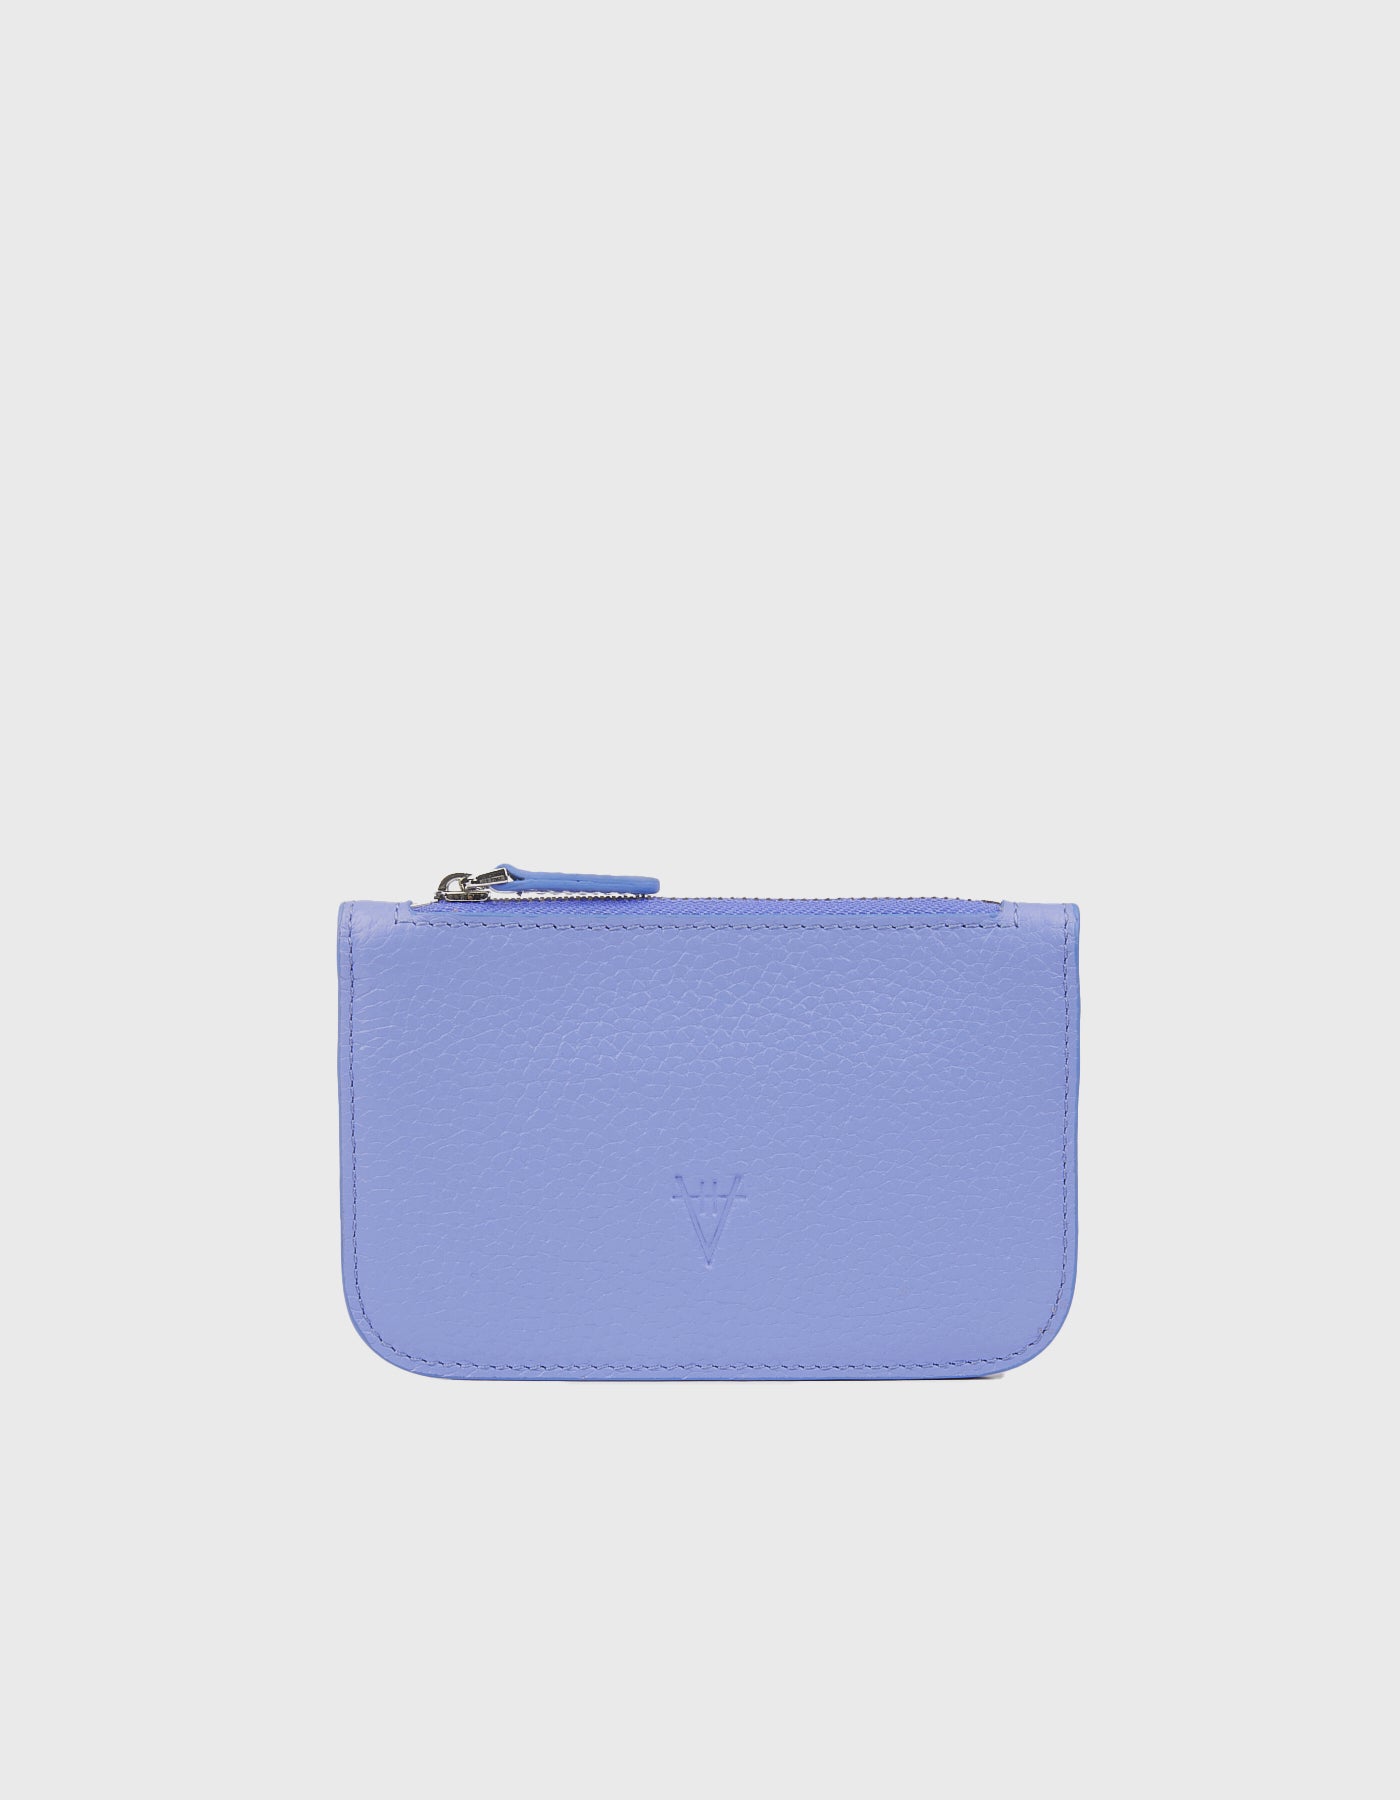 Hiva Atelier | Alae Coin Purse & Card Holder Lavender | Beautiful and Versatile